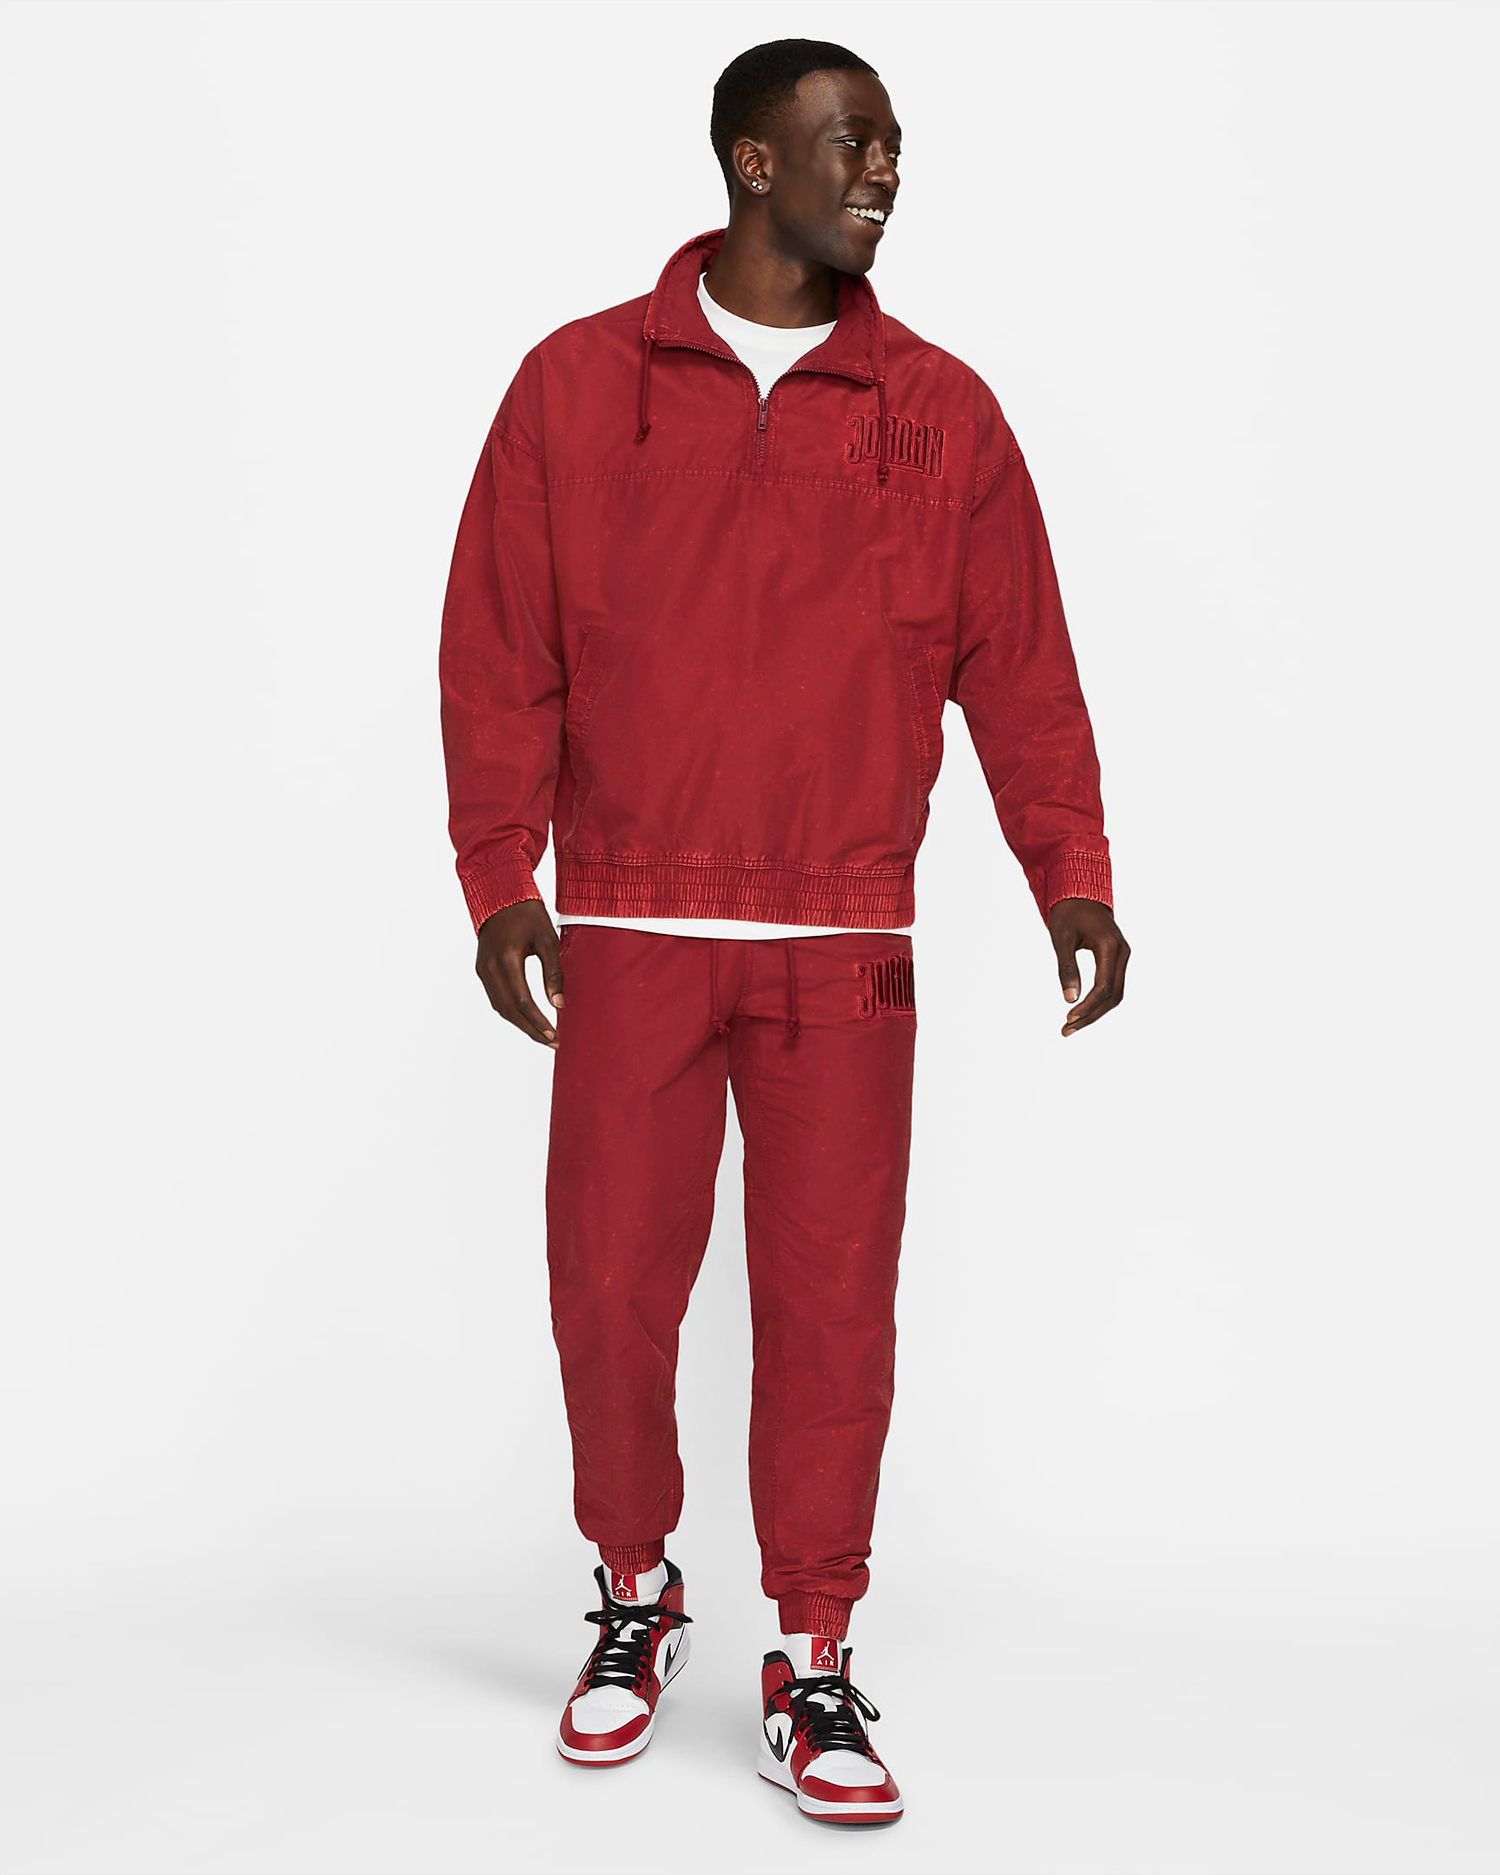 Jordan Team Red Shirts Clothing Outfits to Match Air Jordans